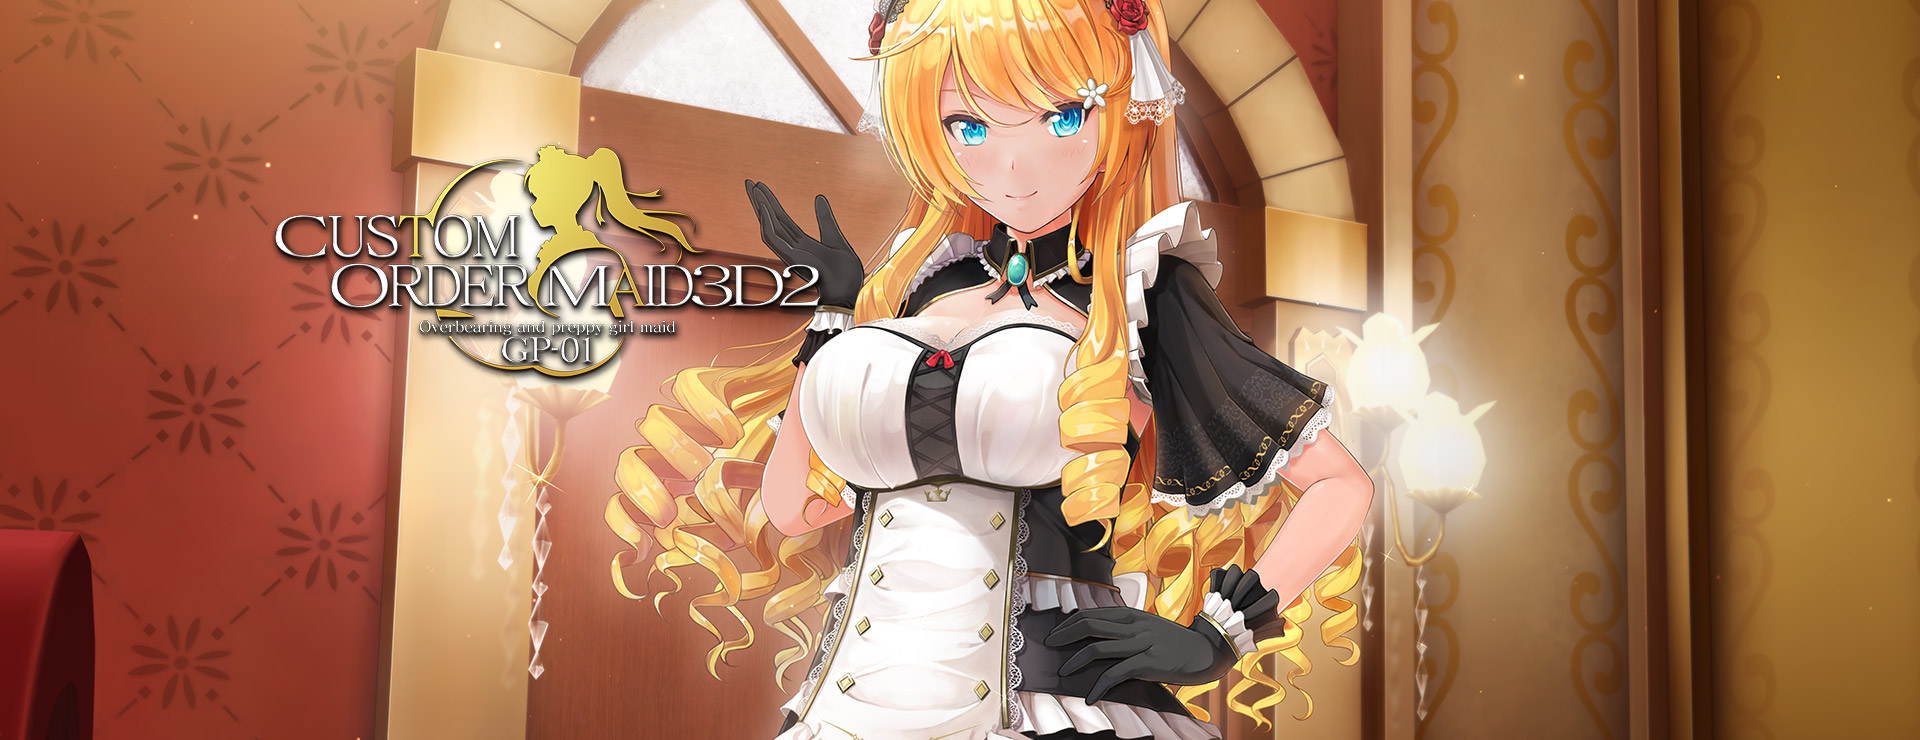 Custom Order Maid 3D2: Overbearing and Preppy Girl Maid GP-01 - シミュレーション ゲーム